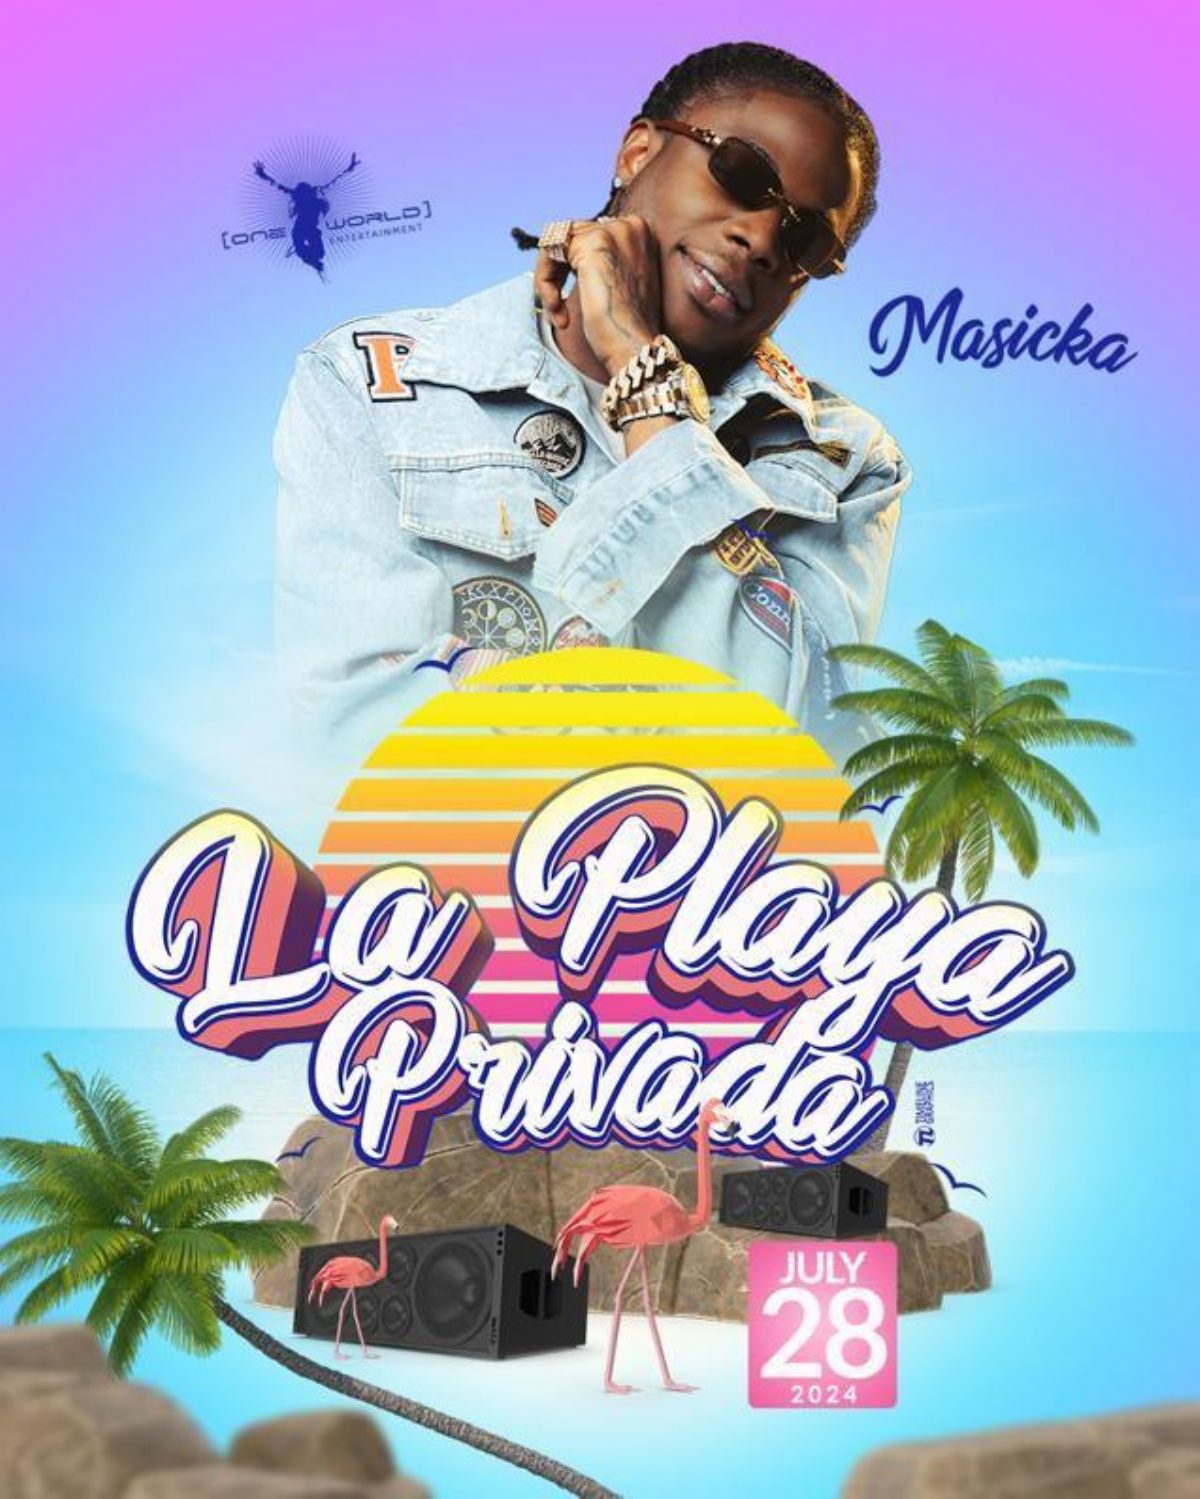 La Playa Privada Event Poster